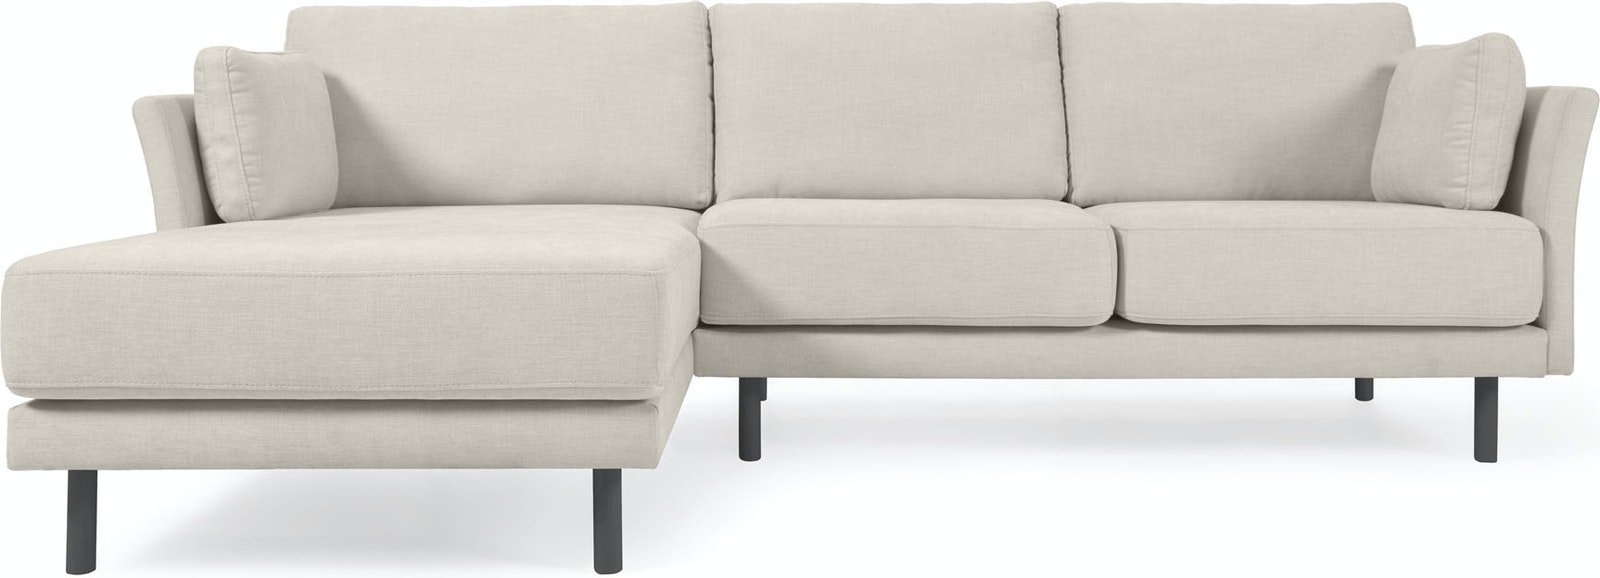 Gilma, Højre/Venstre chaiselong, 3-personers sofa by LaForma (H: 83 cm. B: 261 cm. L: 158 cm., Beige/sort)